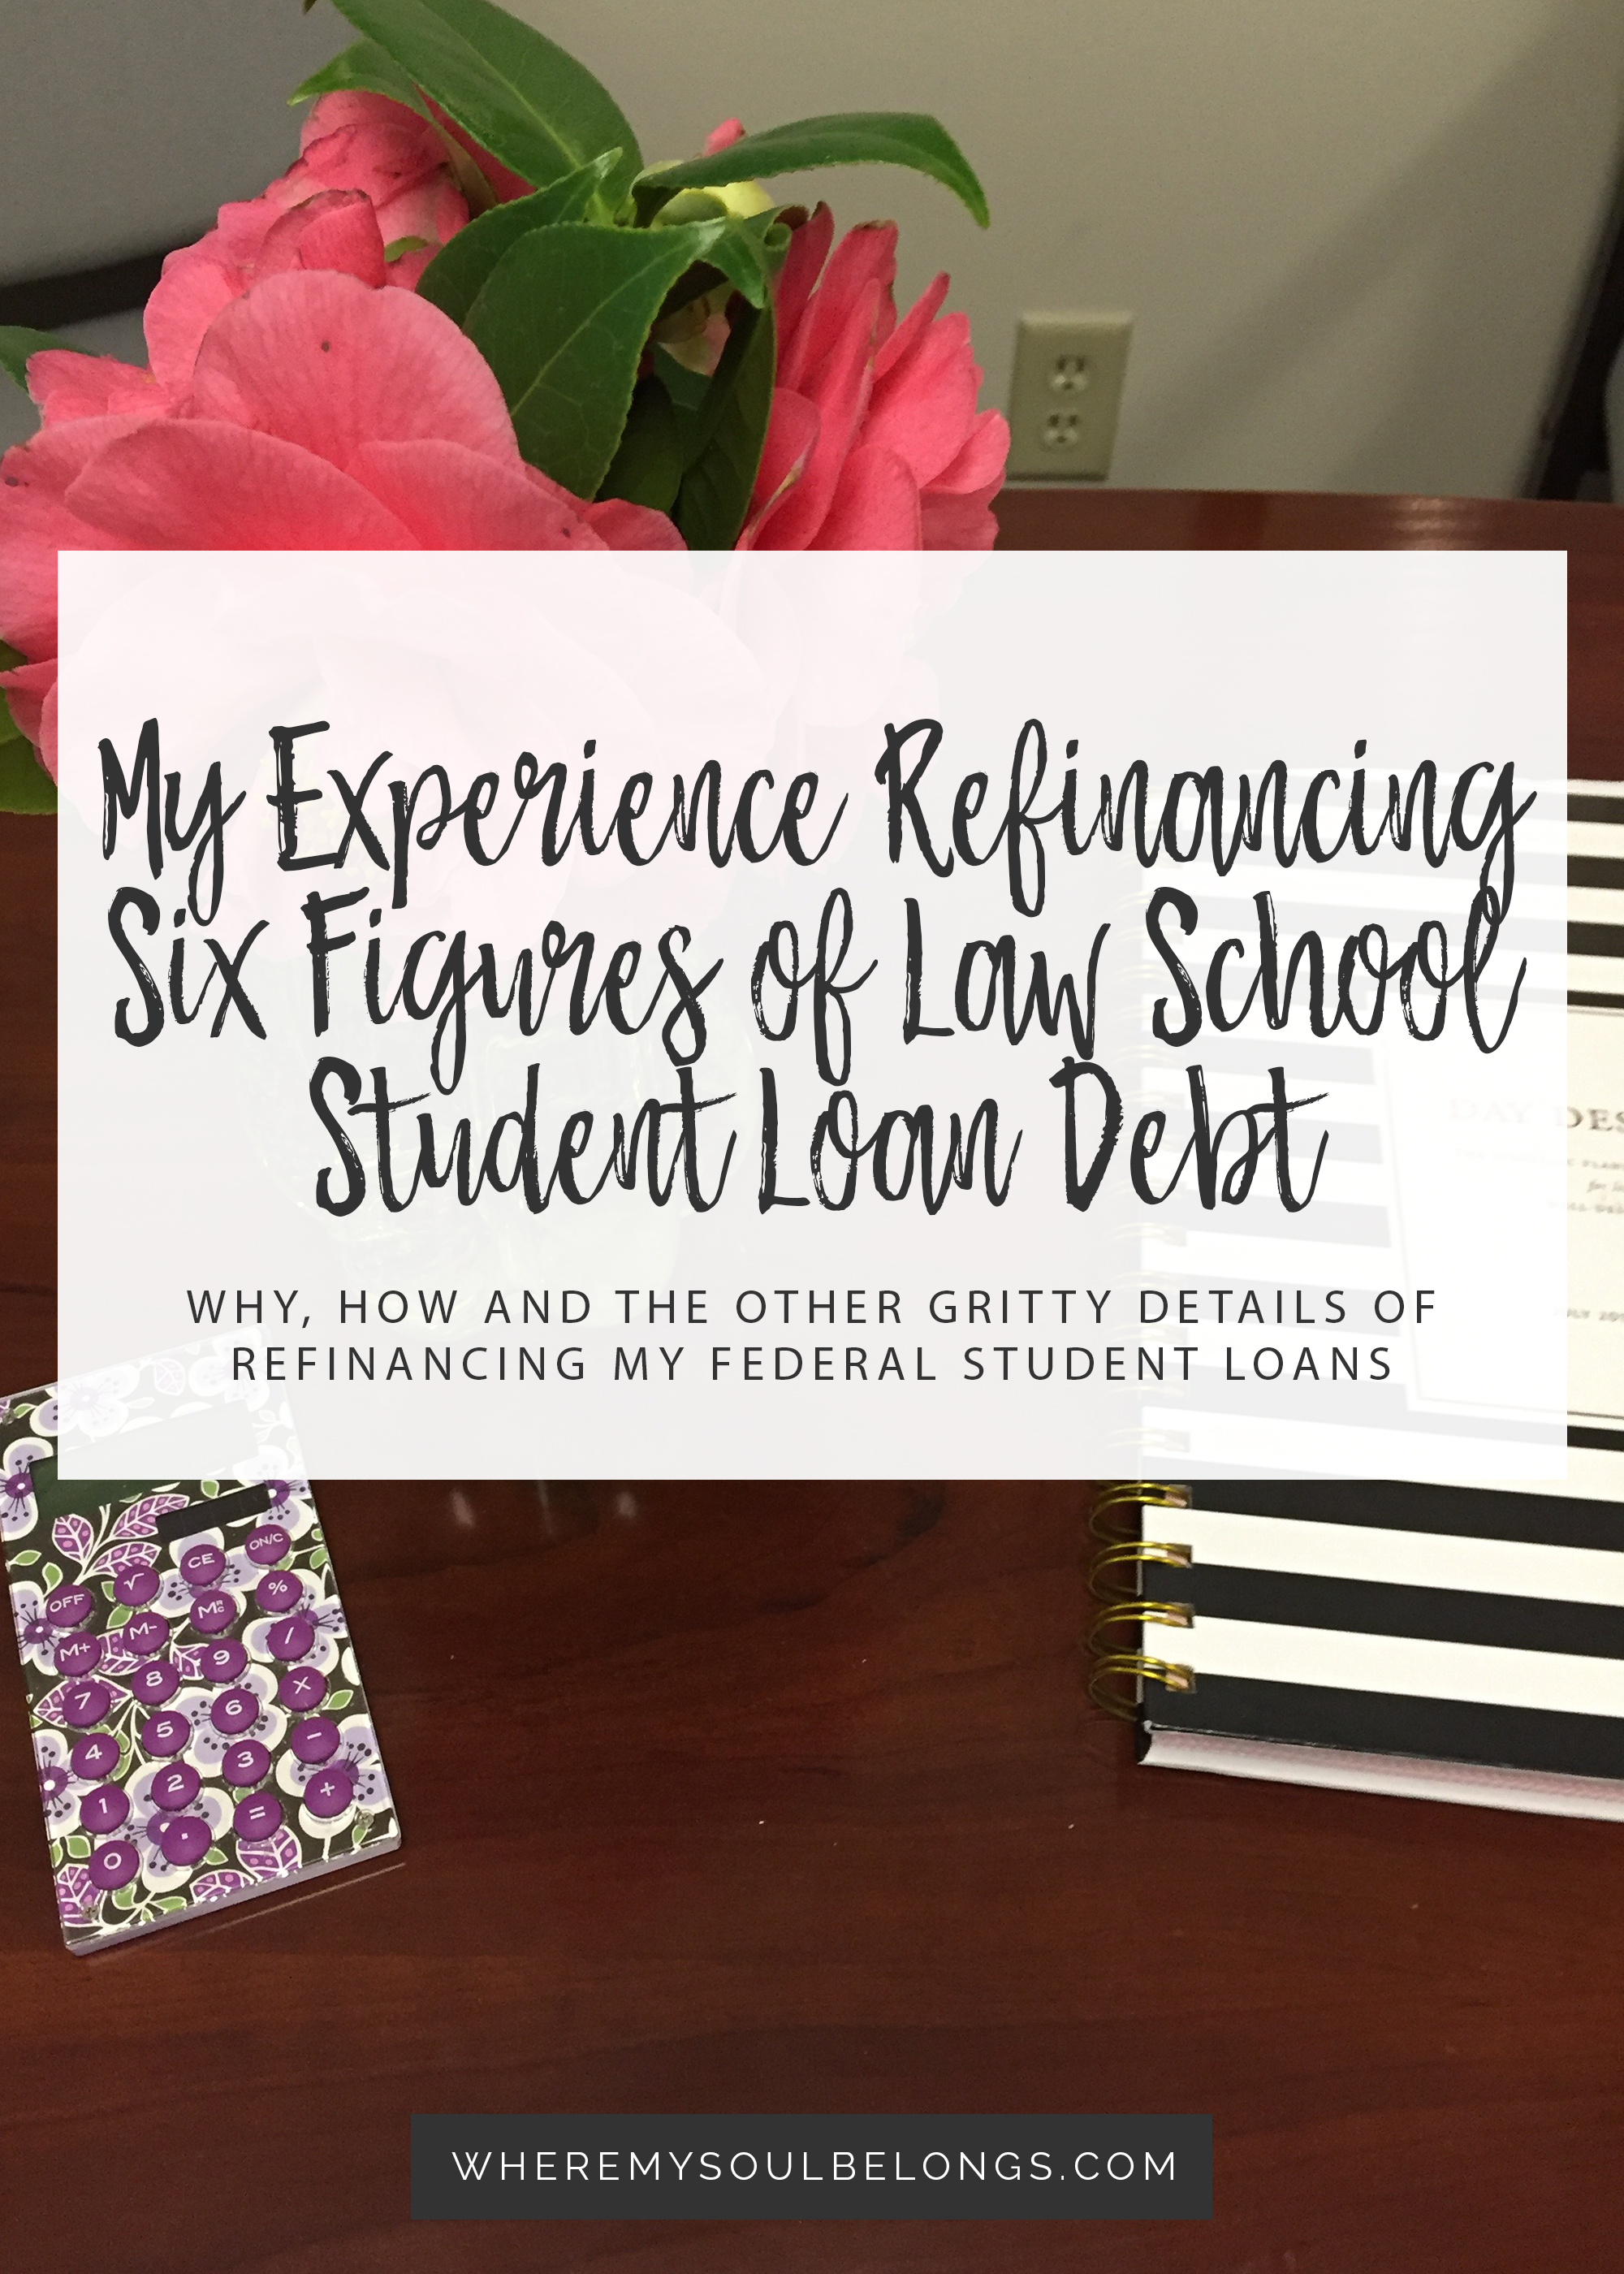 When Start Repaying Student Loan